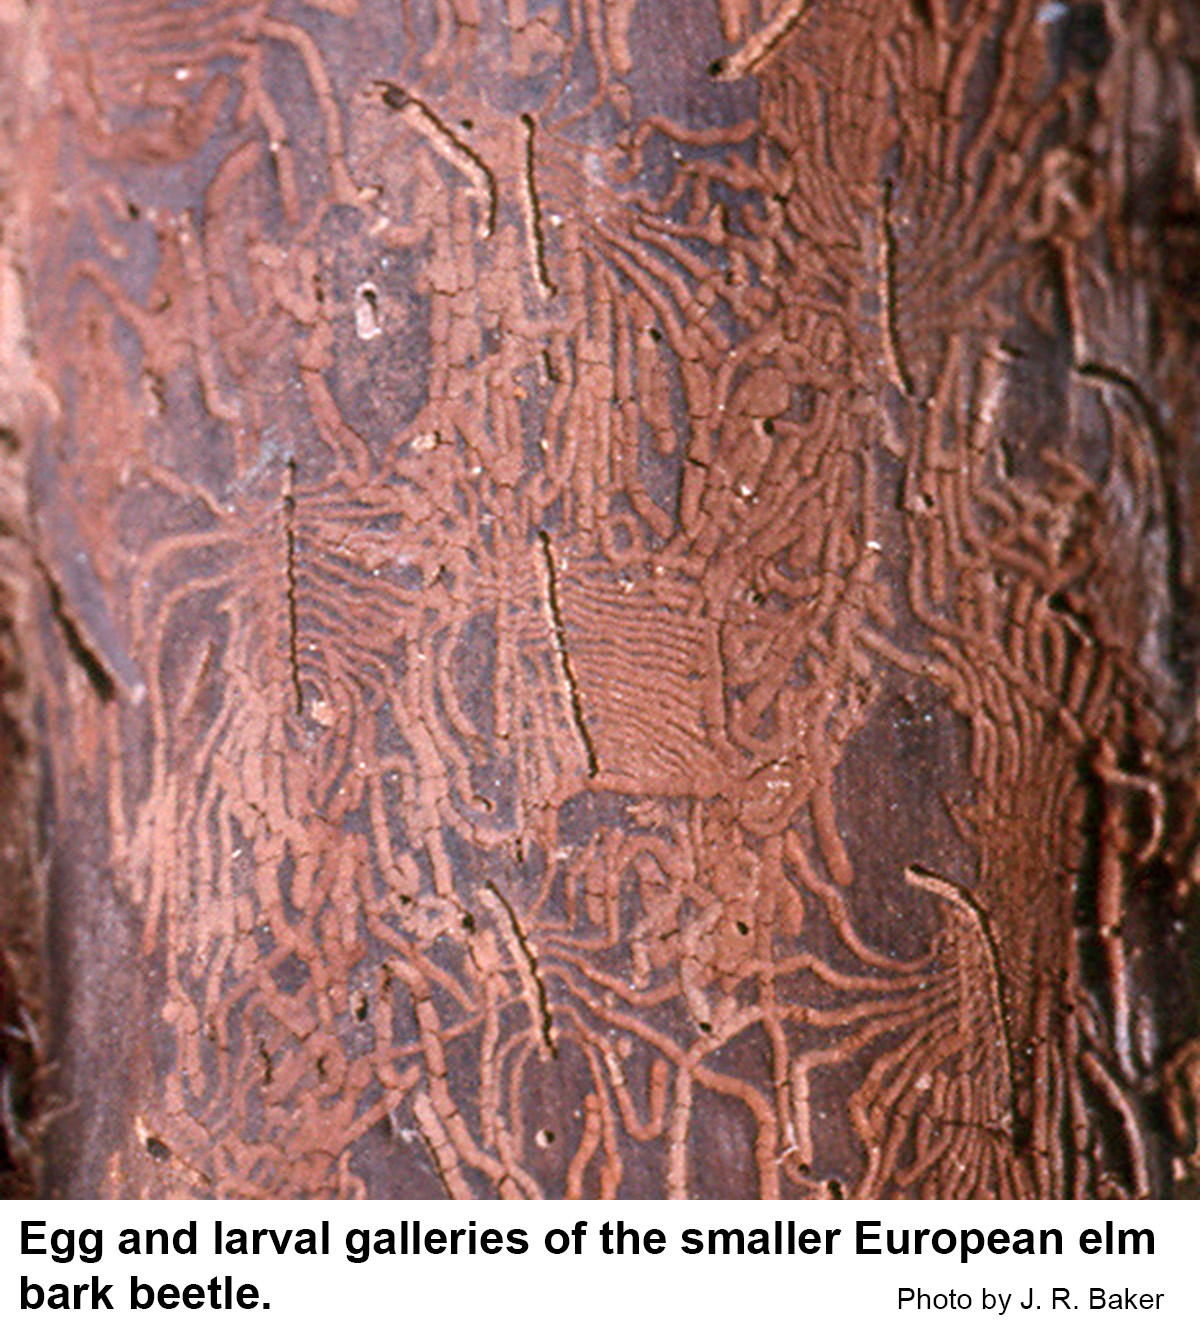 Egg galleries and larval galleries of the smaller European elm bark beetle